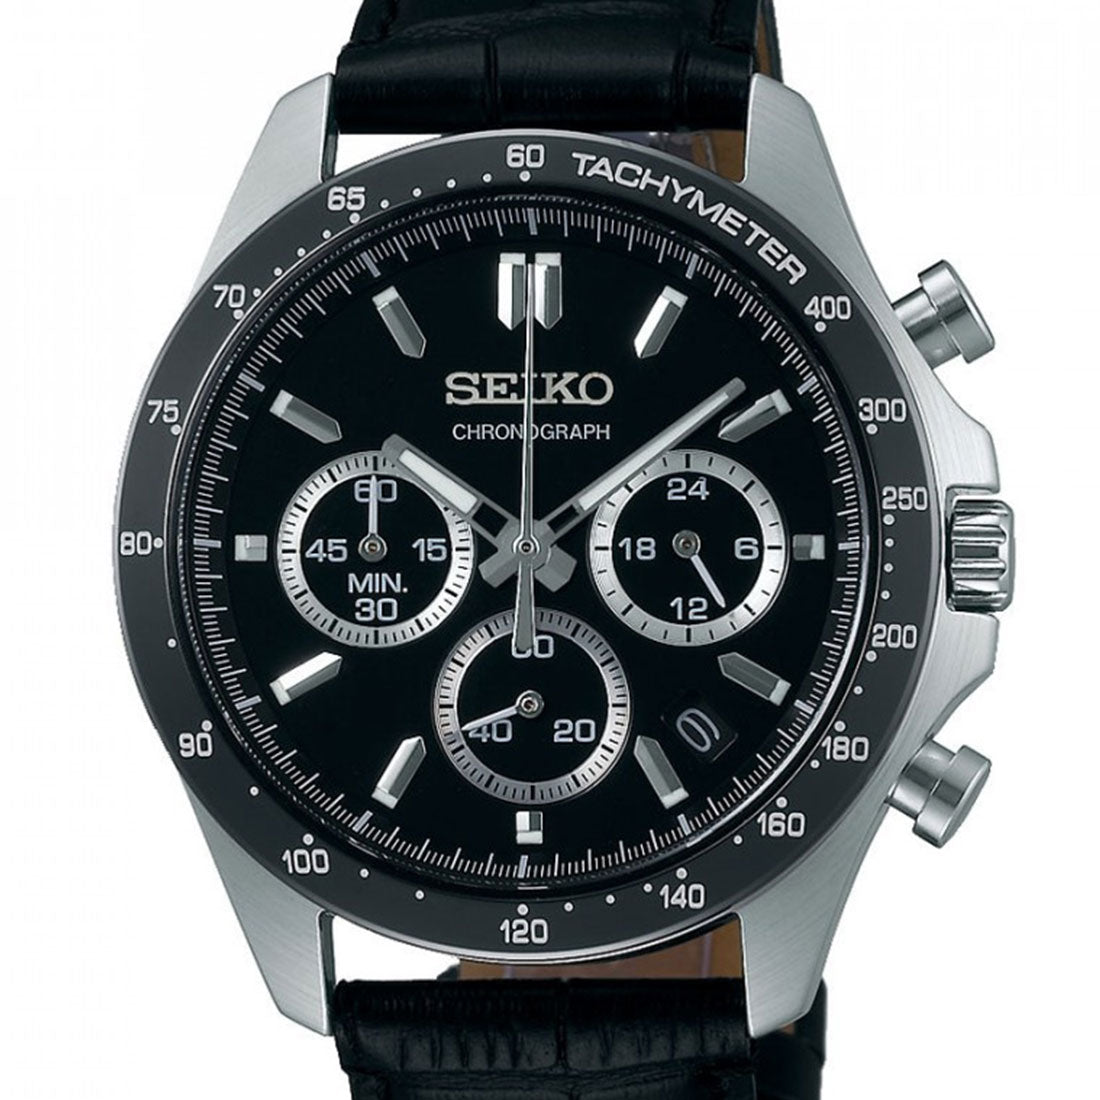 Seiko JDM Spirit Selection SBTR021 Black Dial Chronograph Quartz Gents Watch